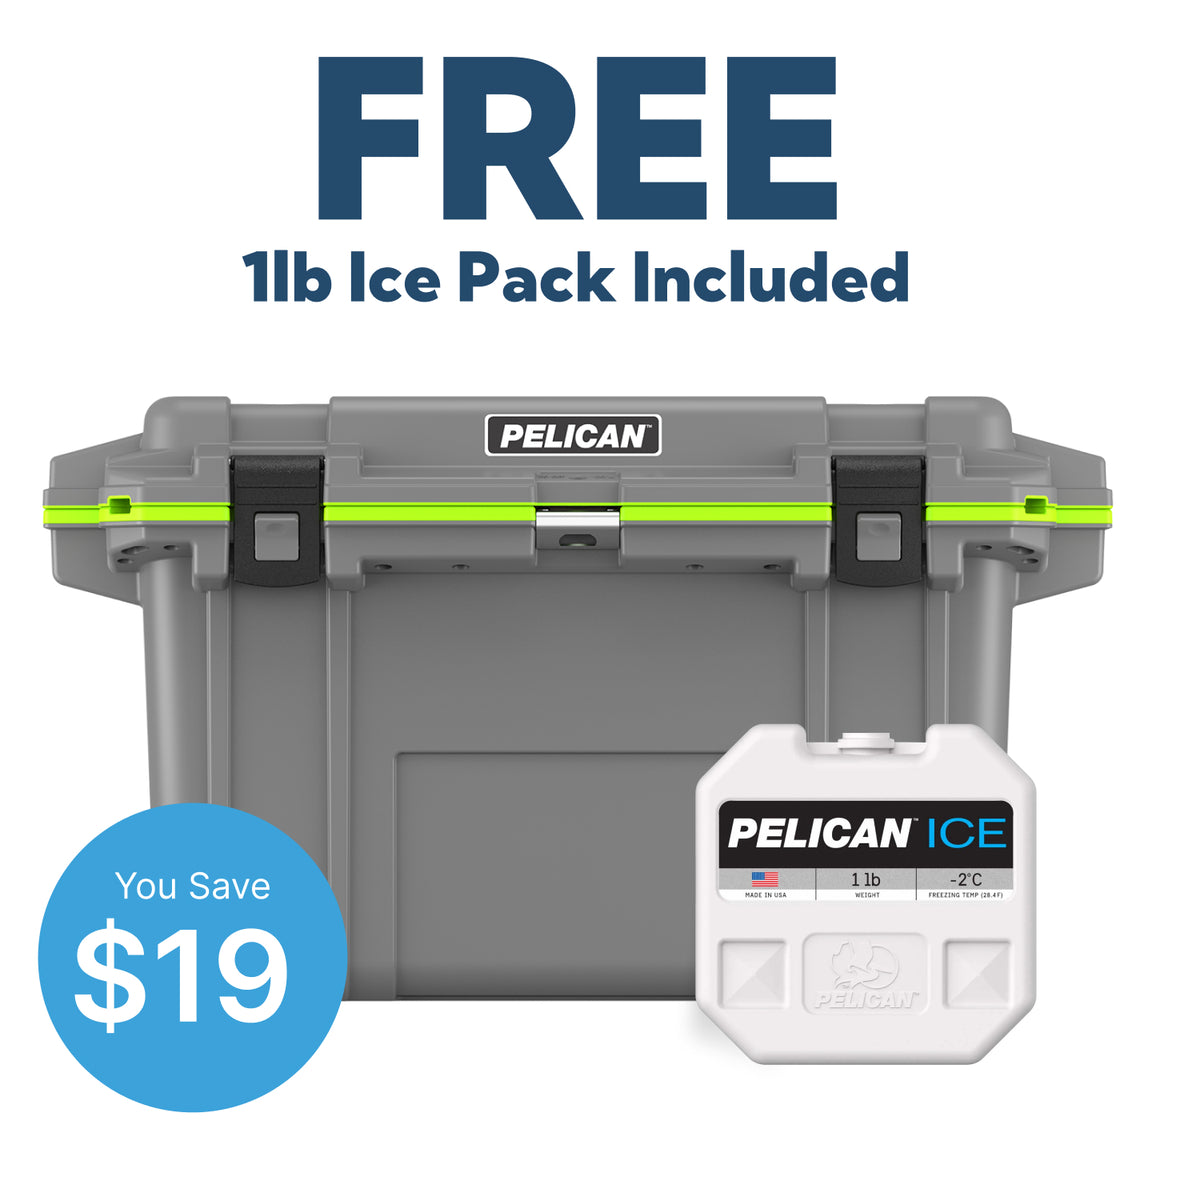 Dark Grey / Green Pelican 70QT Cooler With Free 1lb Pelican Ice Pack